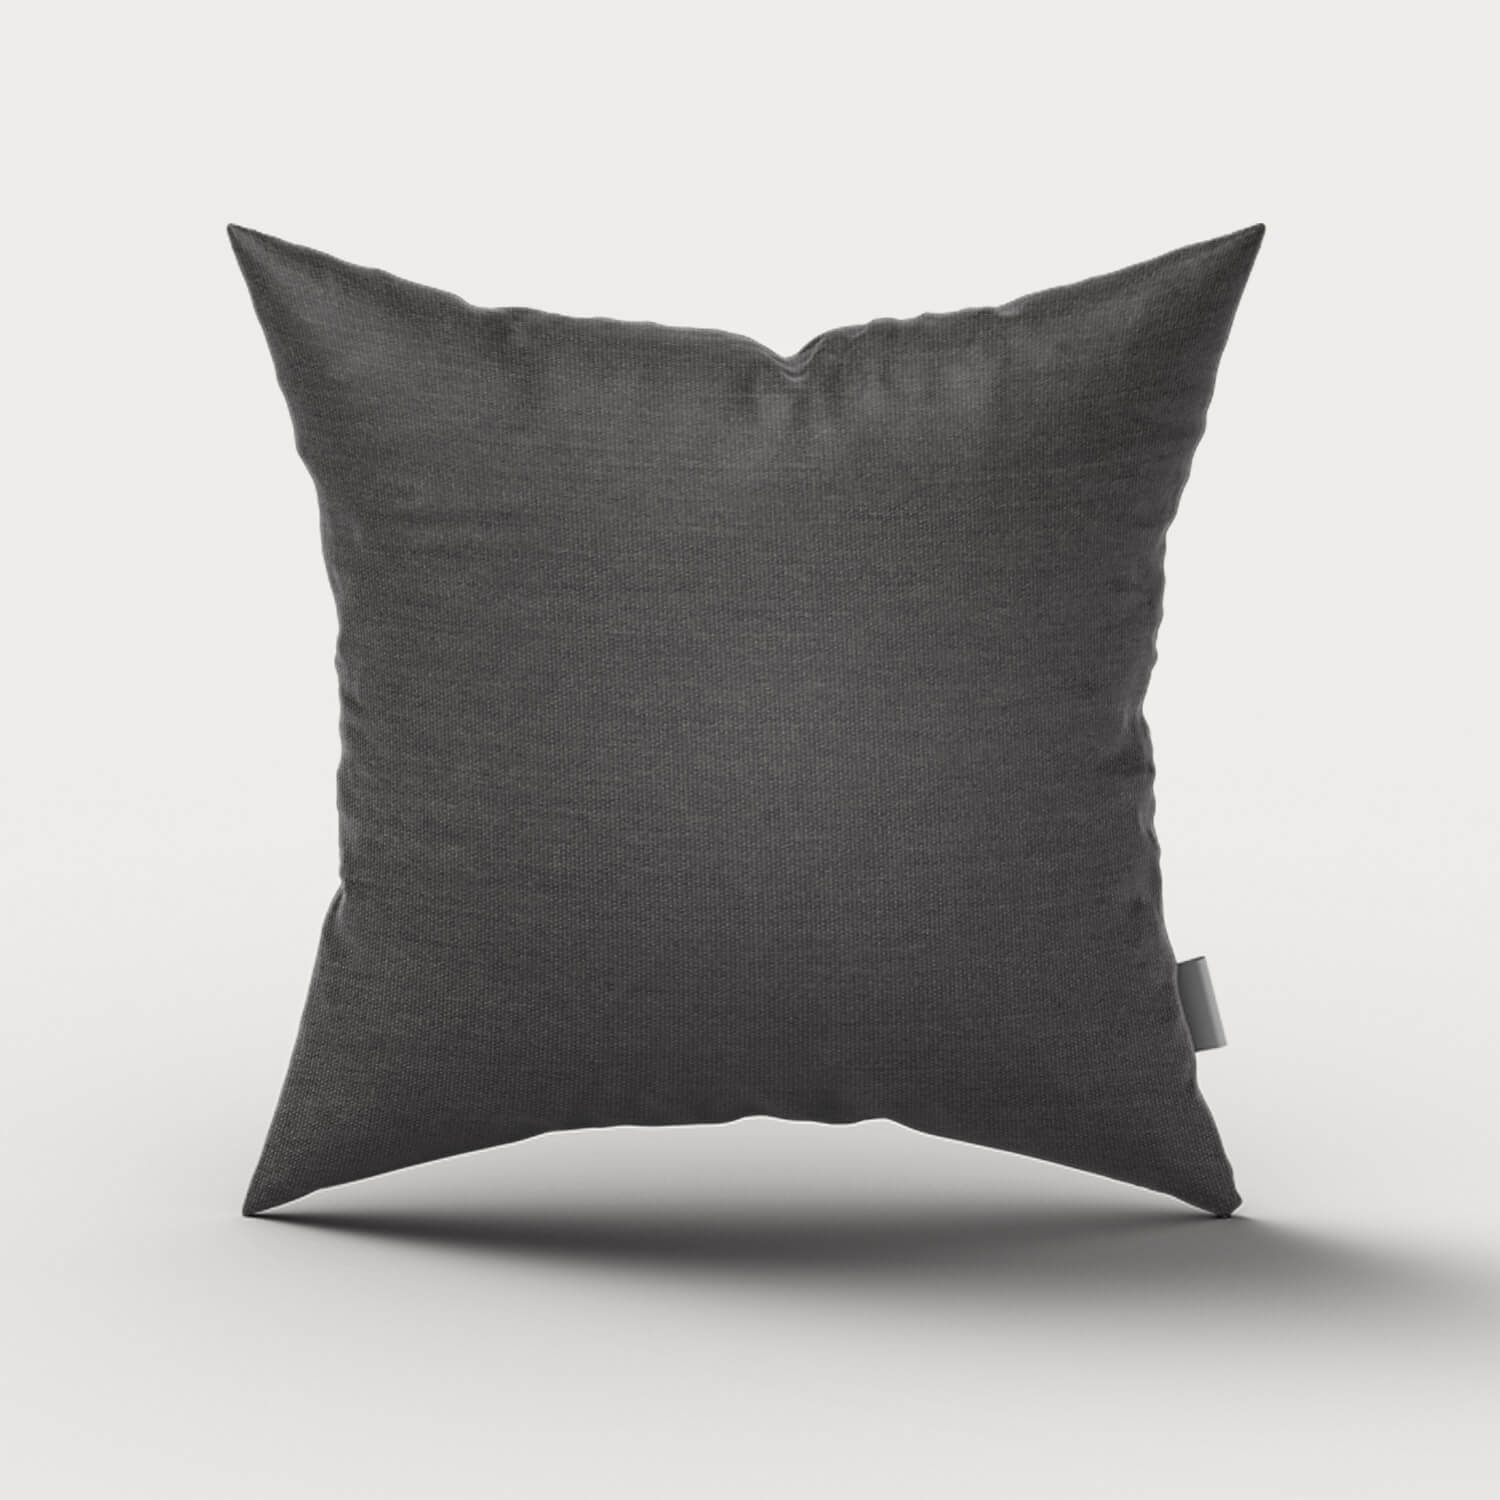 PENGI Waterproof Outdoor Pillow Case 1 Pcs - Mix Charcoal Gray